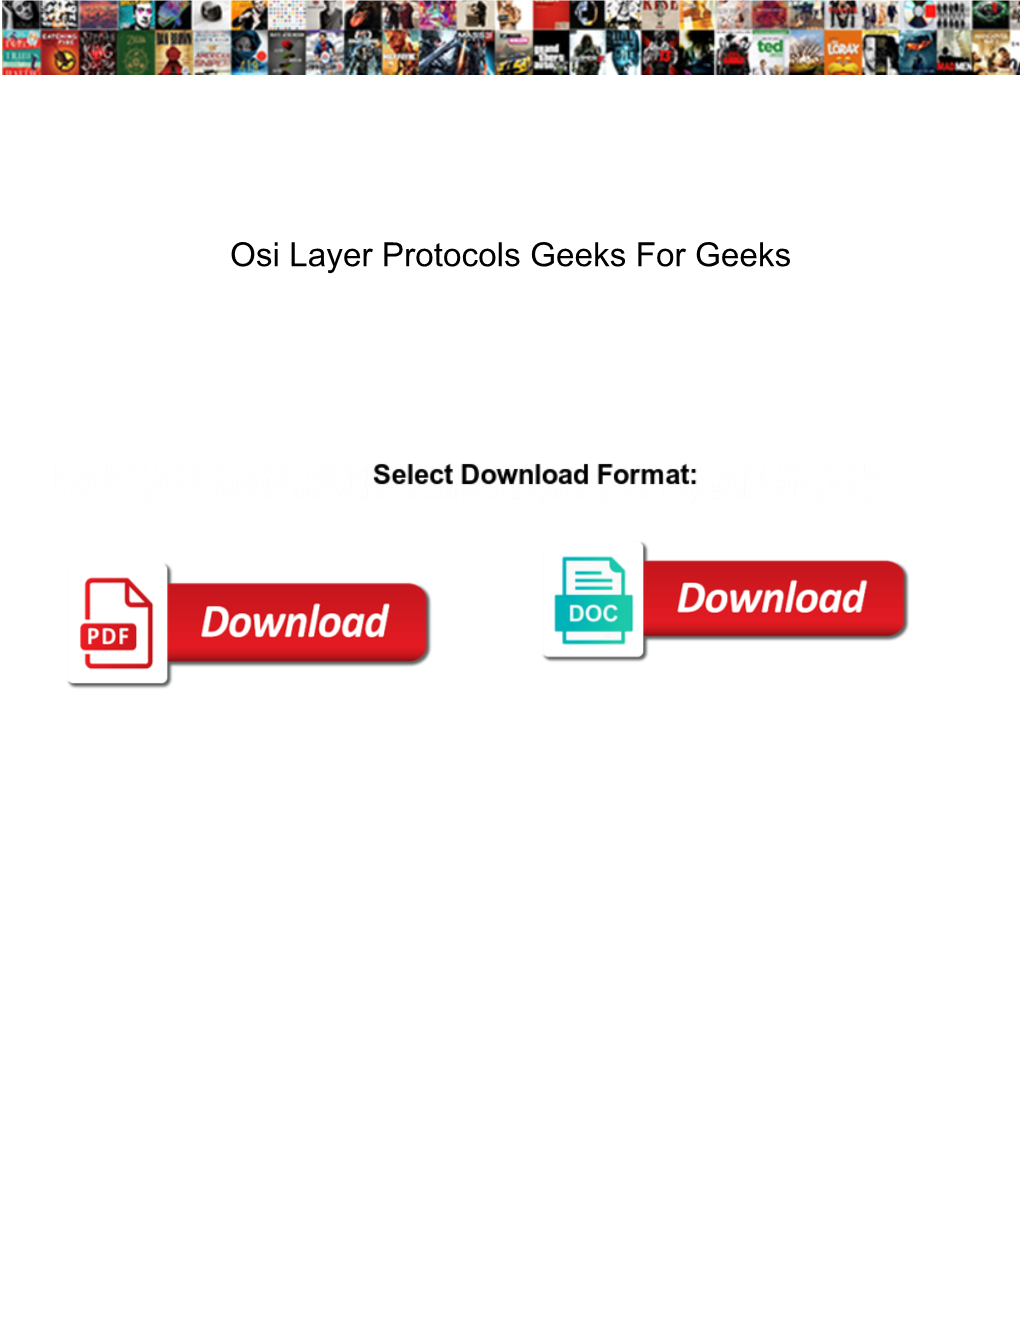 Osi Layer Protocols Geeks for Geeks